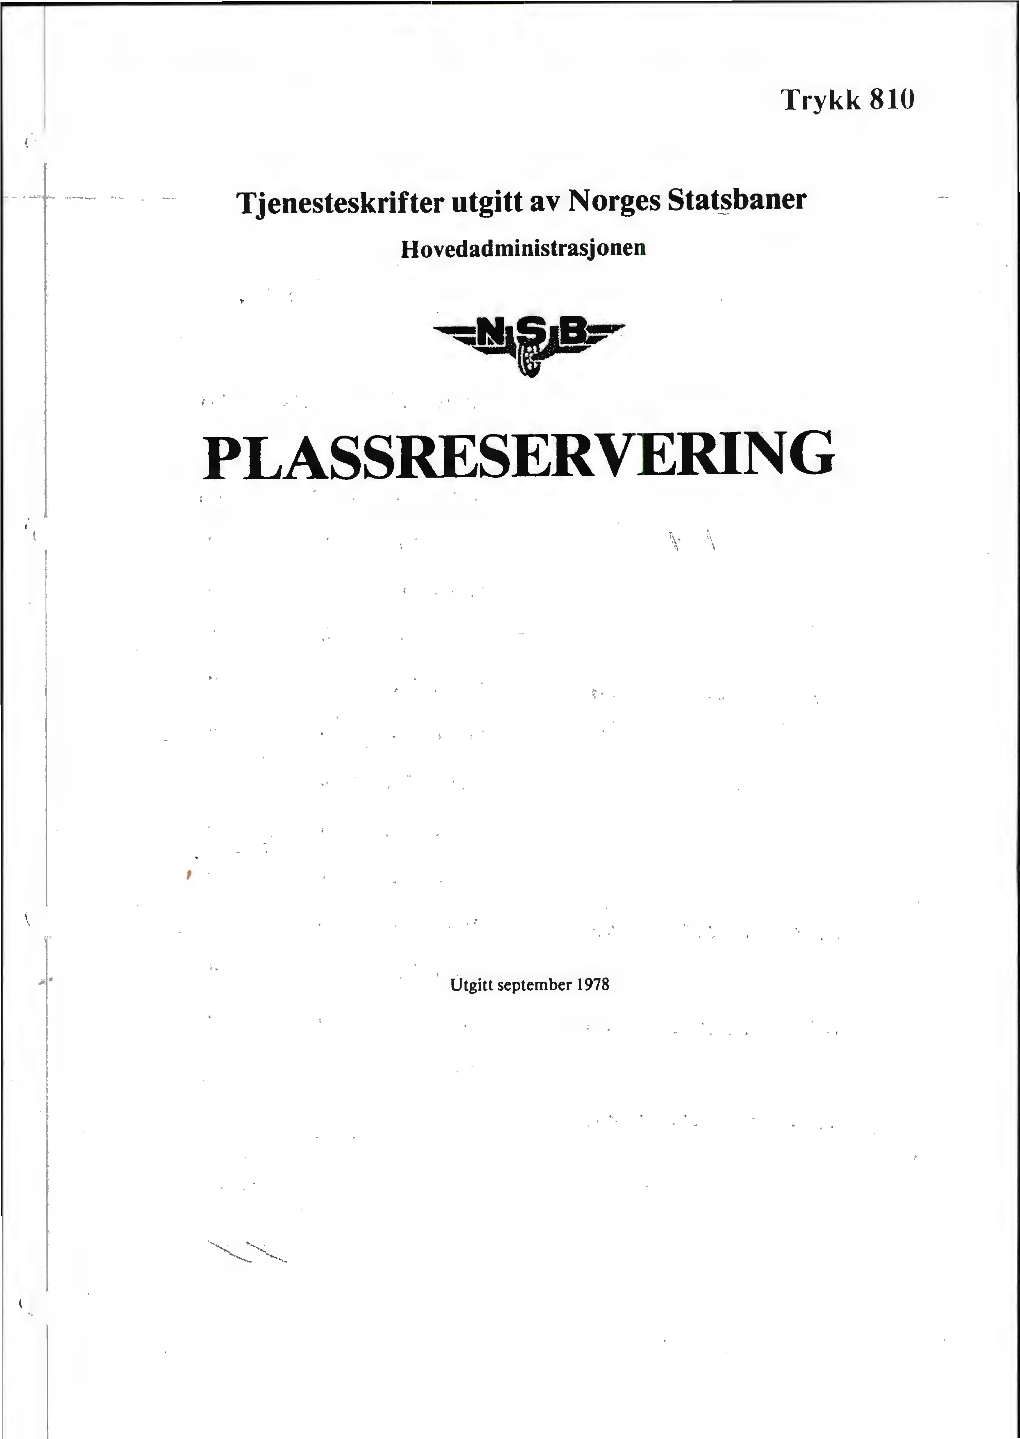 Plassreservering